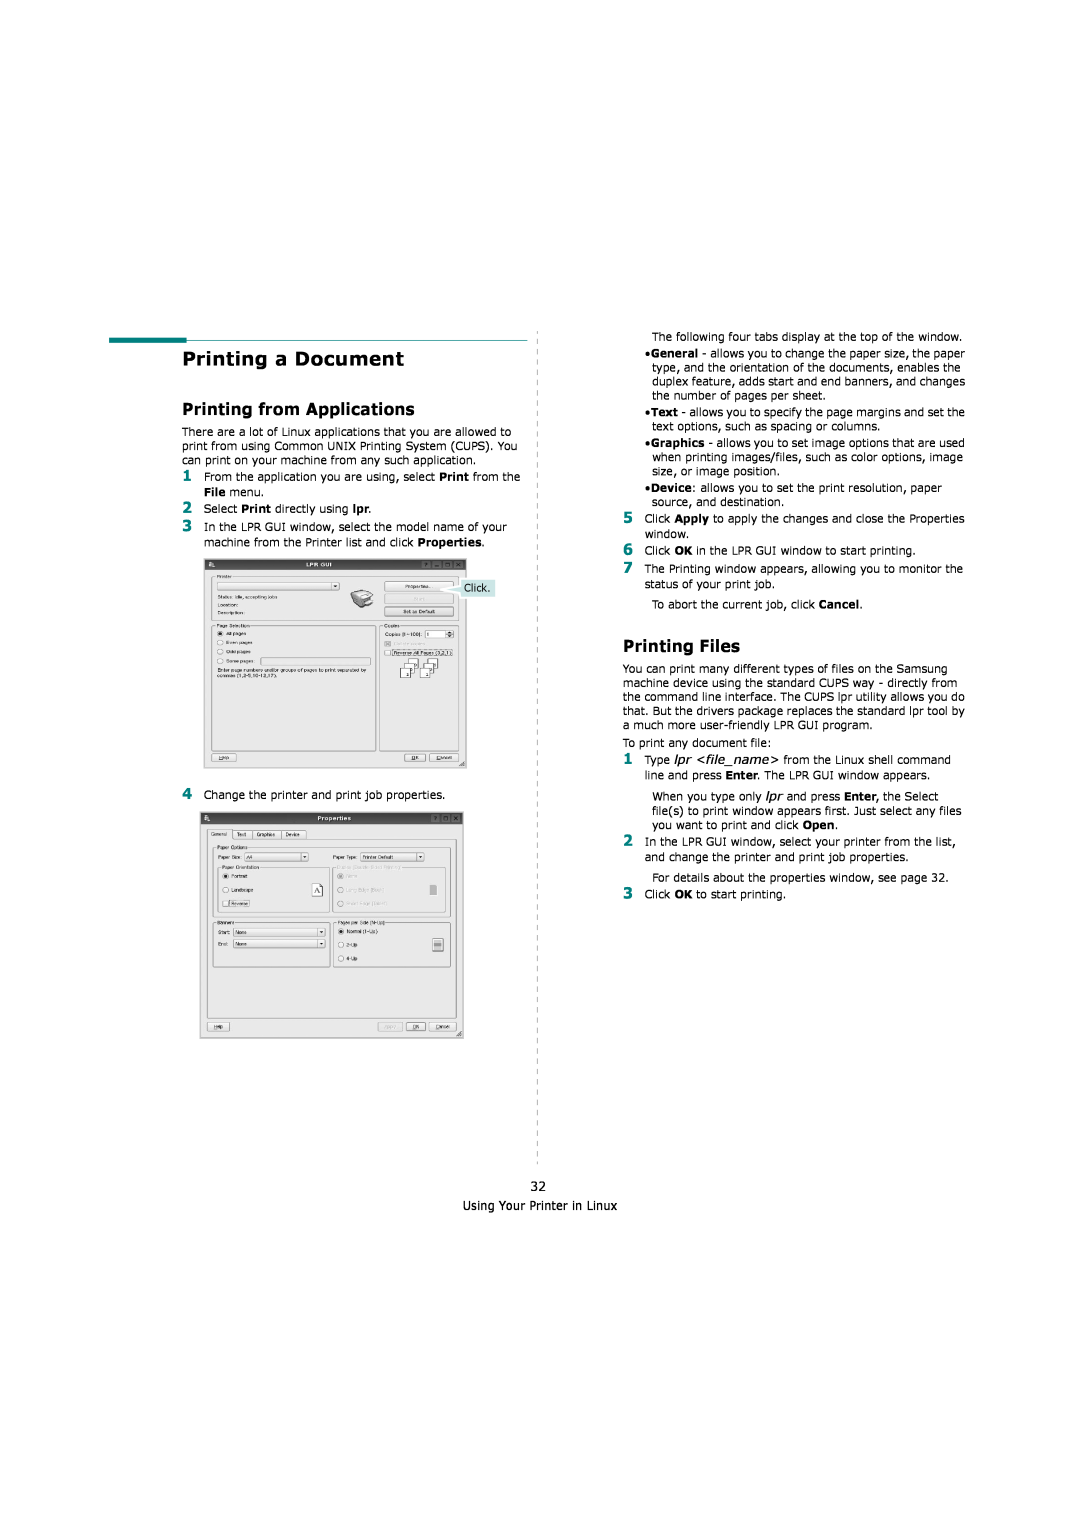 Samsung ML-4550, ML-4551ND manual Printing from Applications, Printing Files, Printing a Document, File menu 